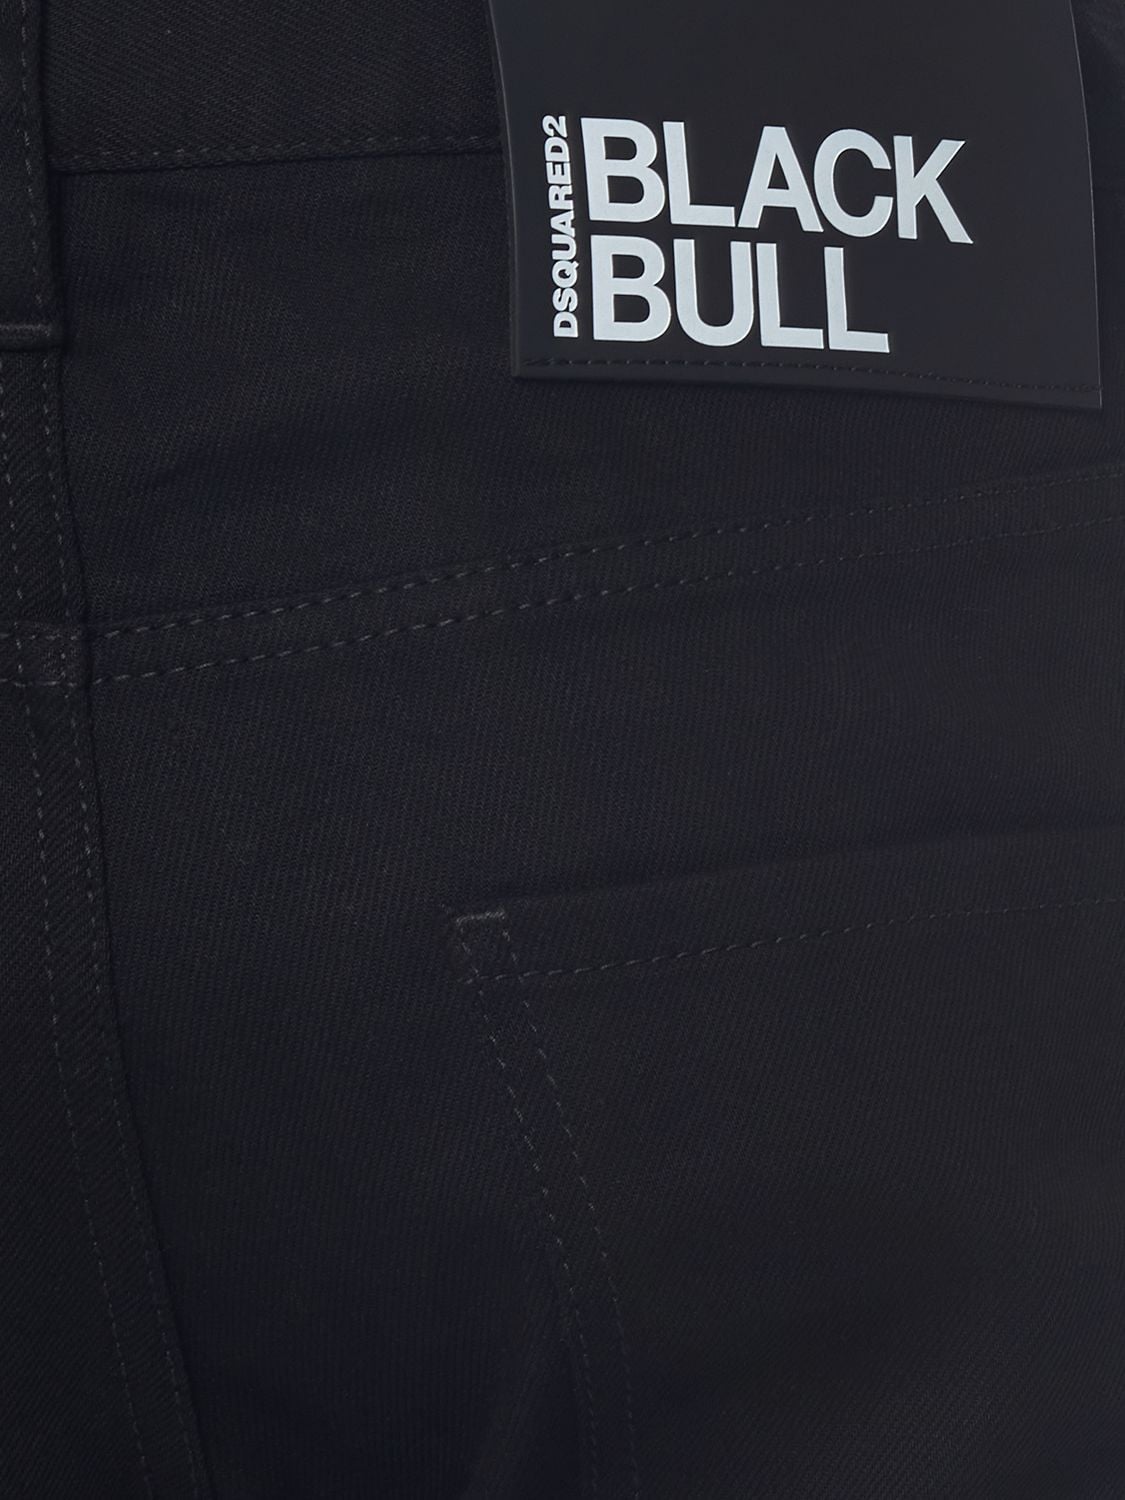 Shop Dsquared2 Skater Black Bull Denim Jeans